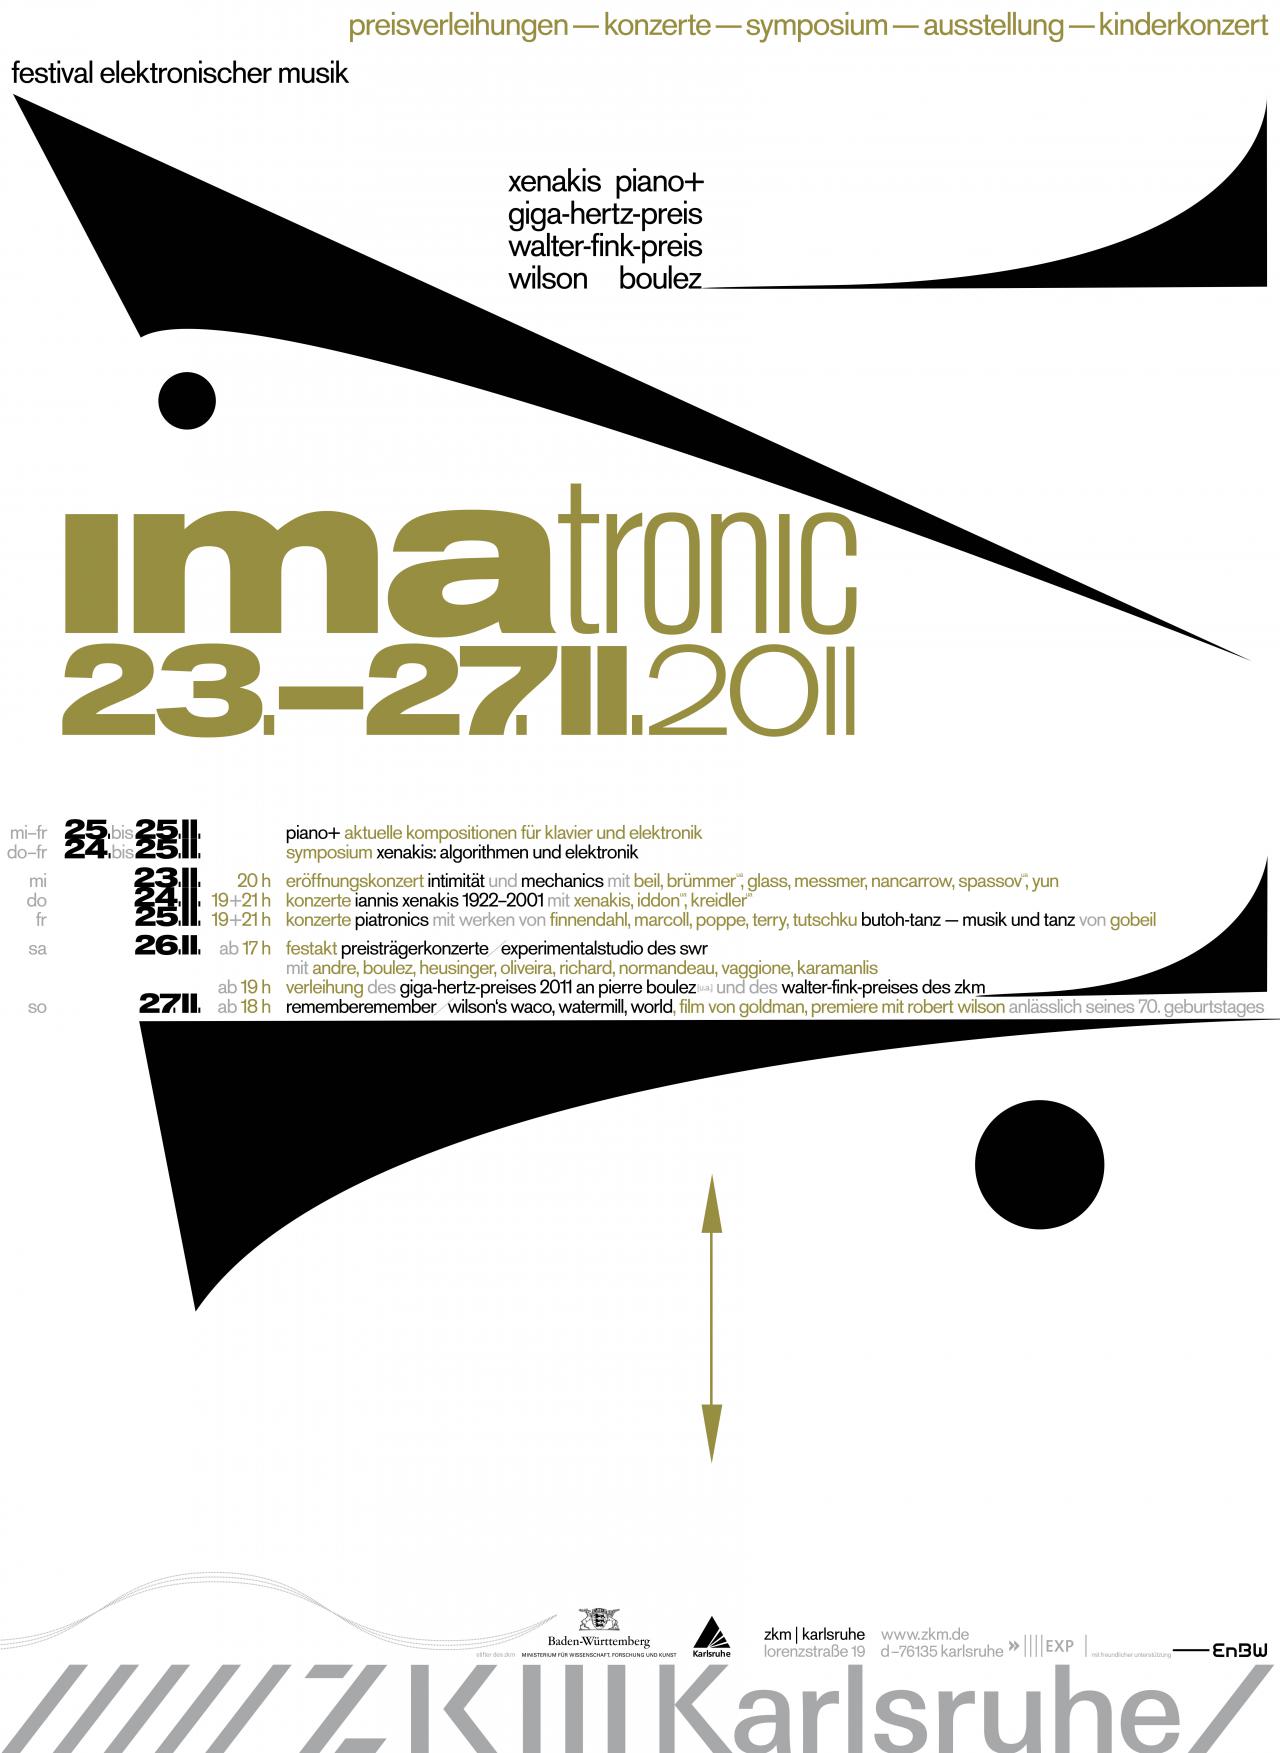 Poster IMATRONIC 2011 at ZKM | Karlsruhe